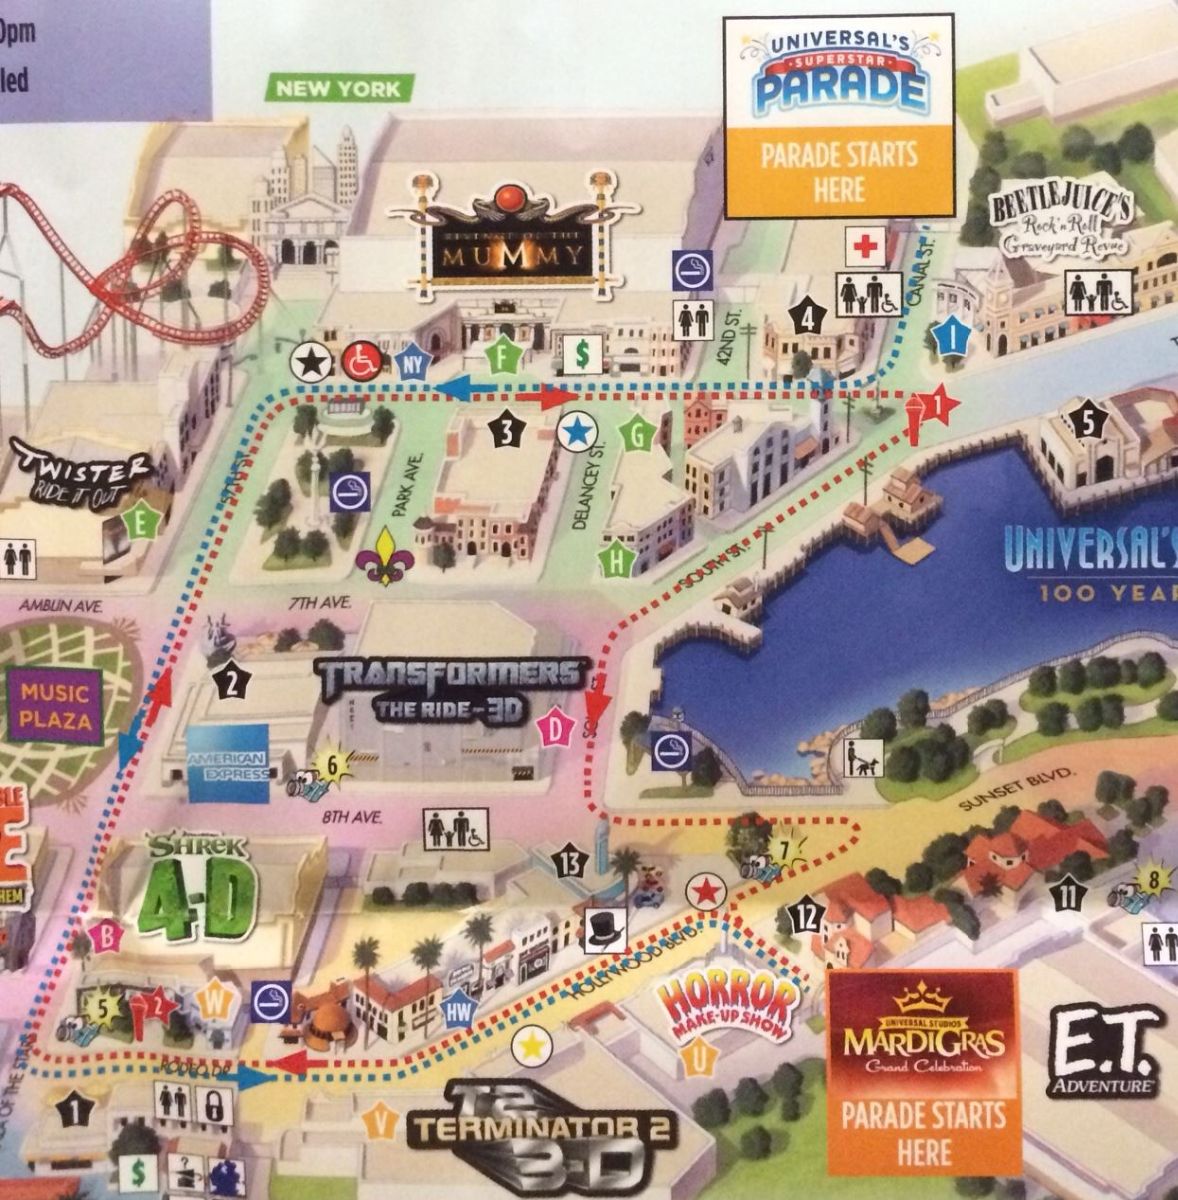 Universal Studios Florida Mardi Gras 2014 Parade Video Touringplans